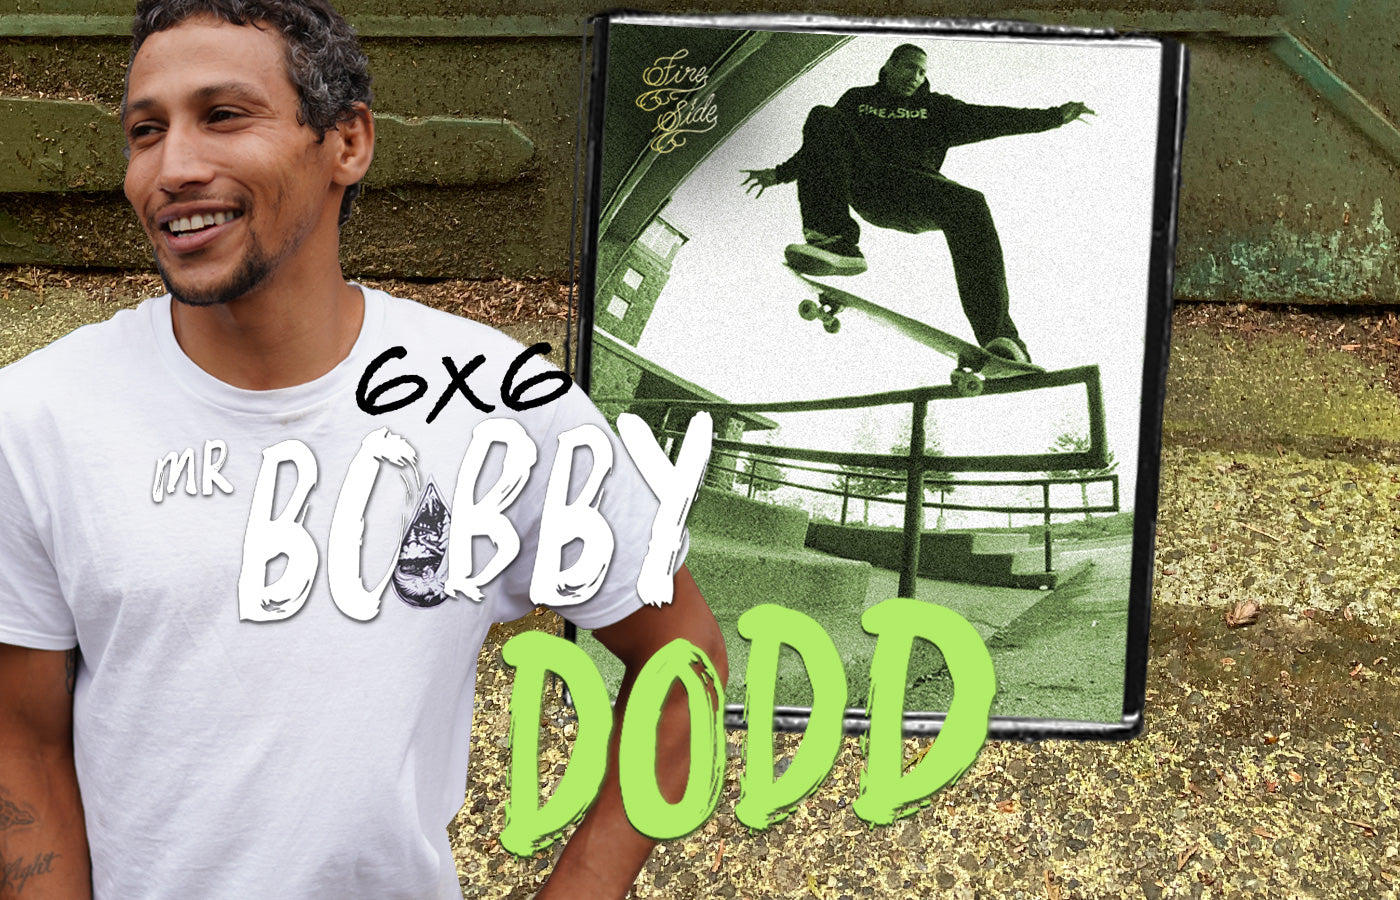 Bobby Dodd x firexside